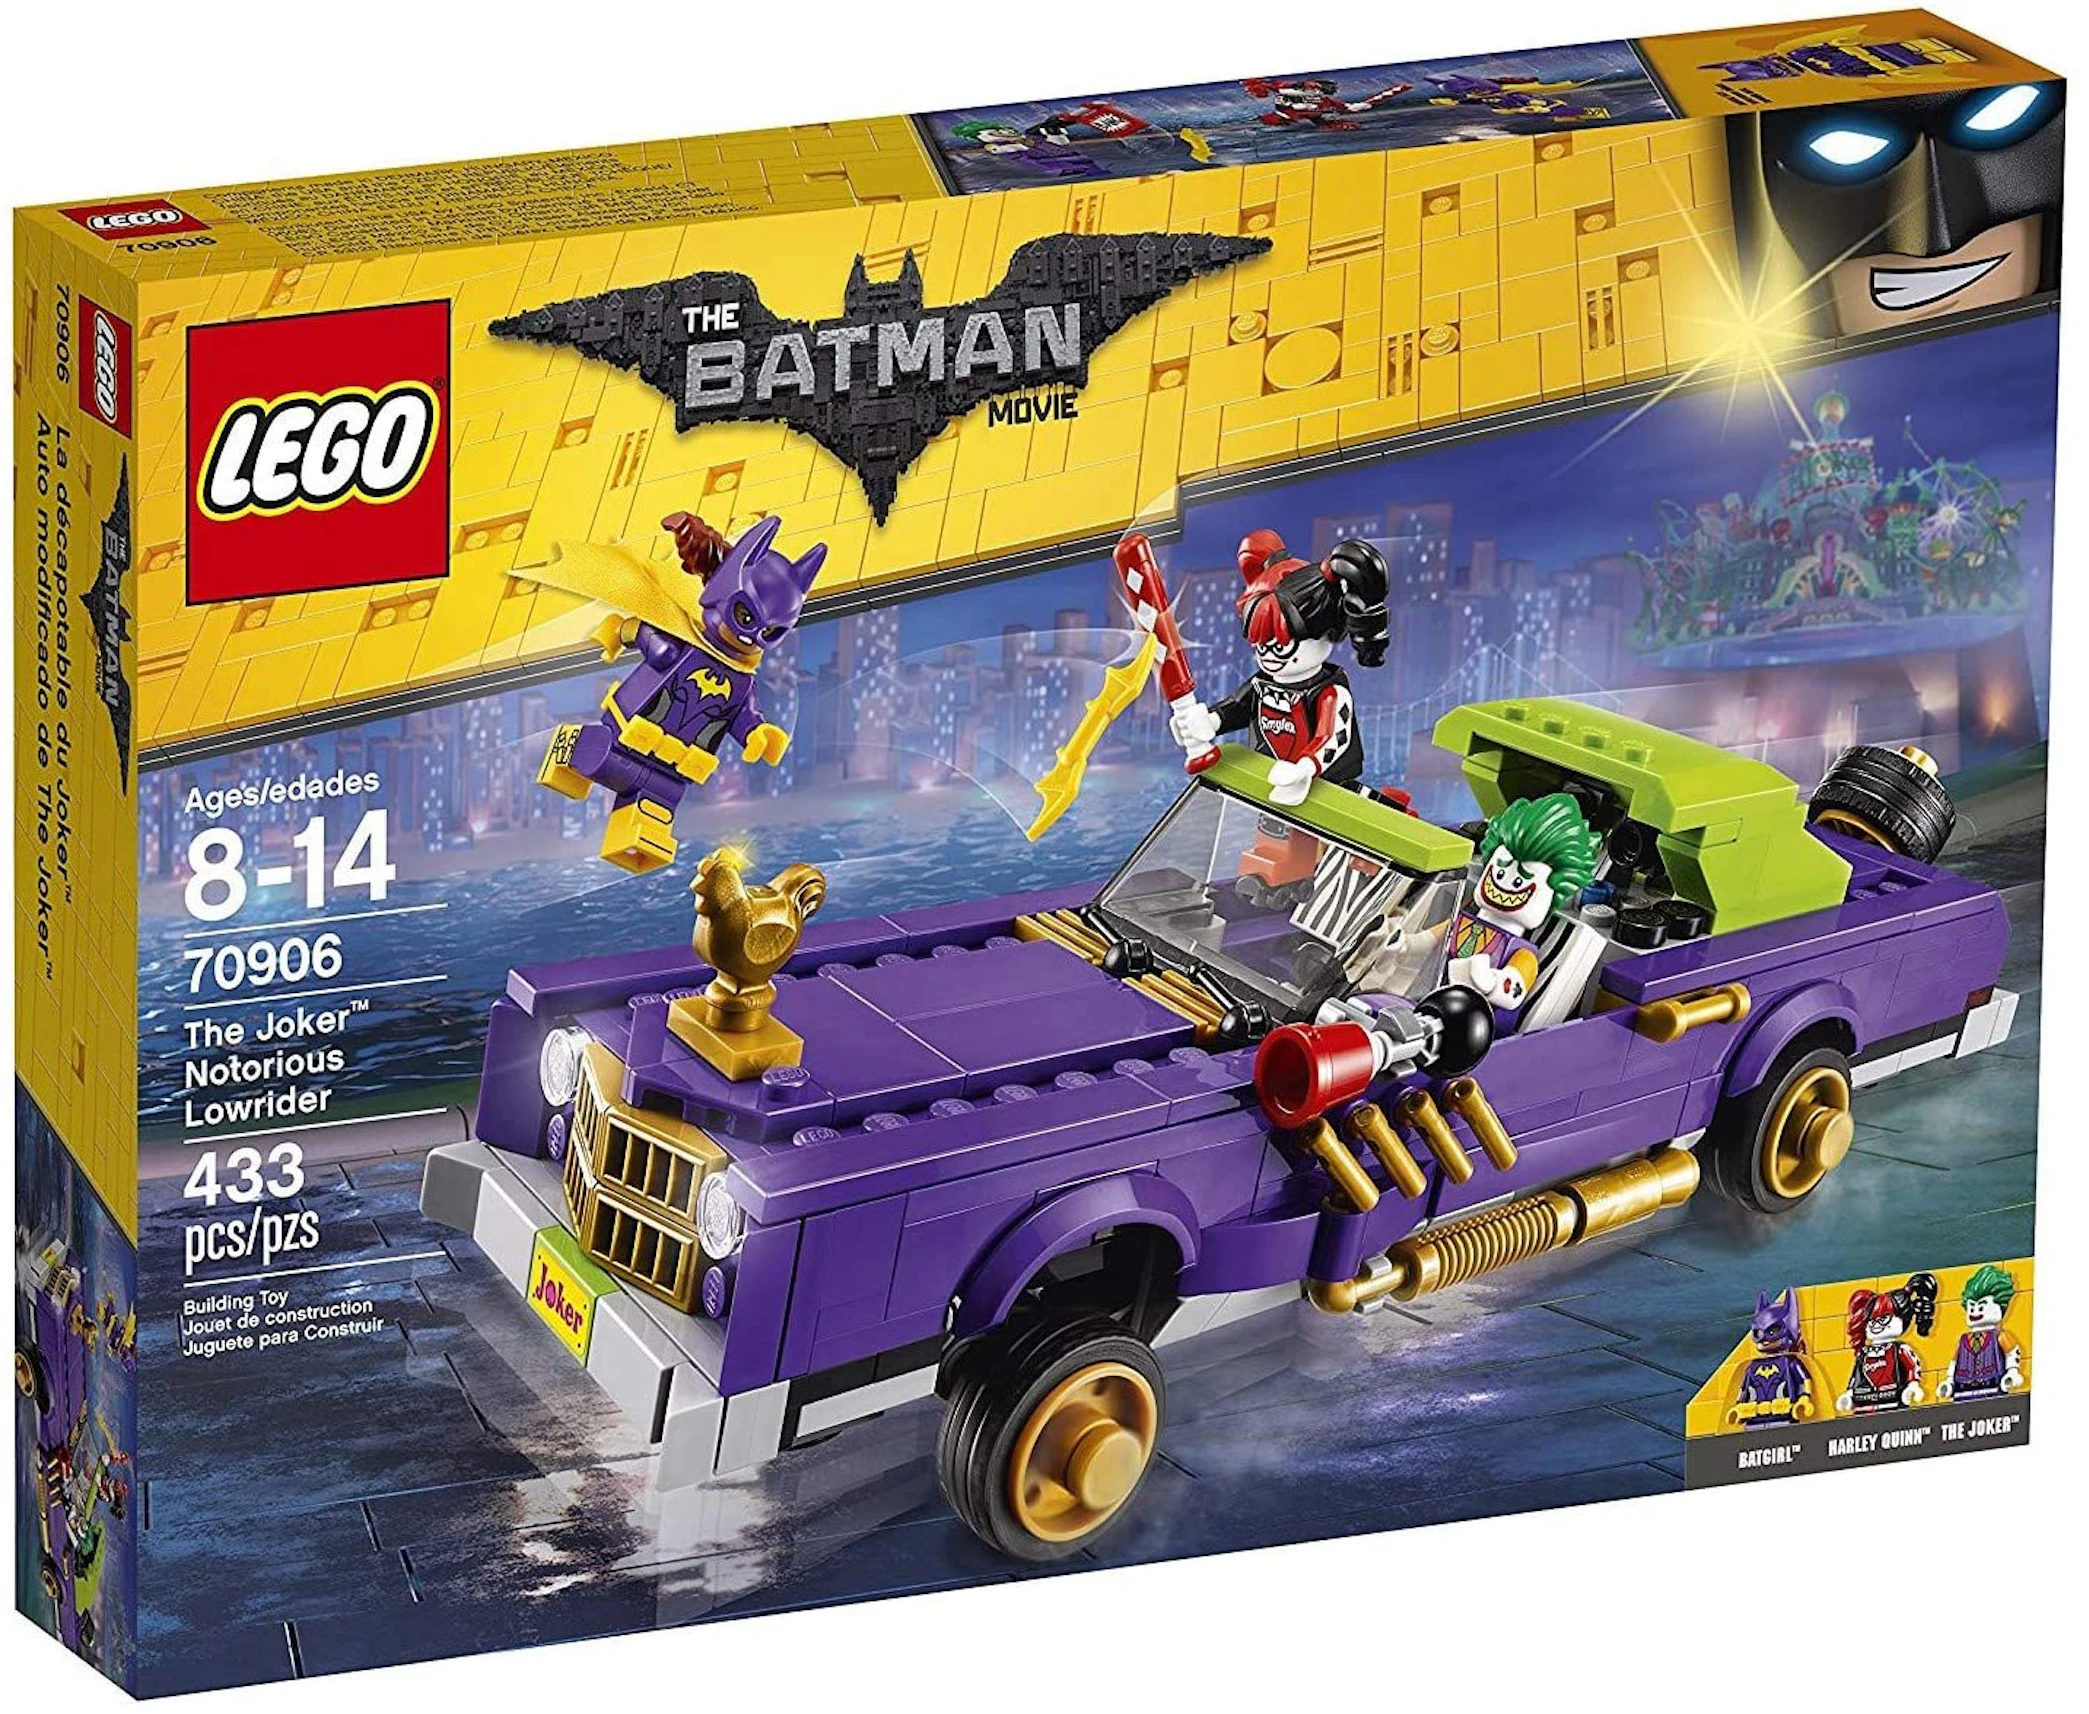 LEGO The LEGO Batman Movie The Joker Notorious Lowrider Set 70906 - GB